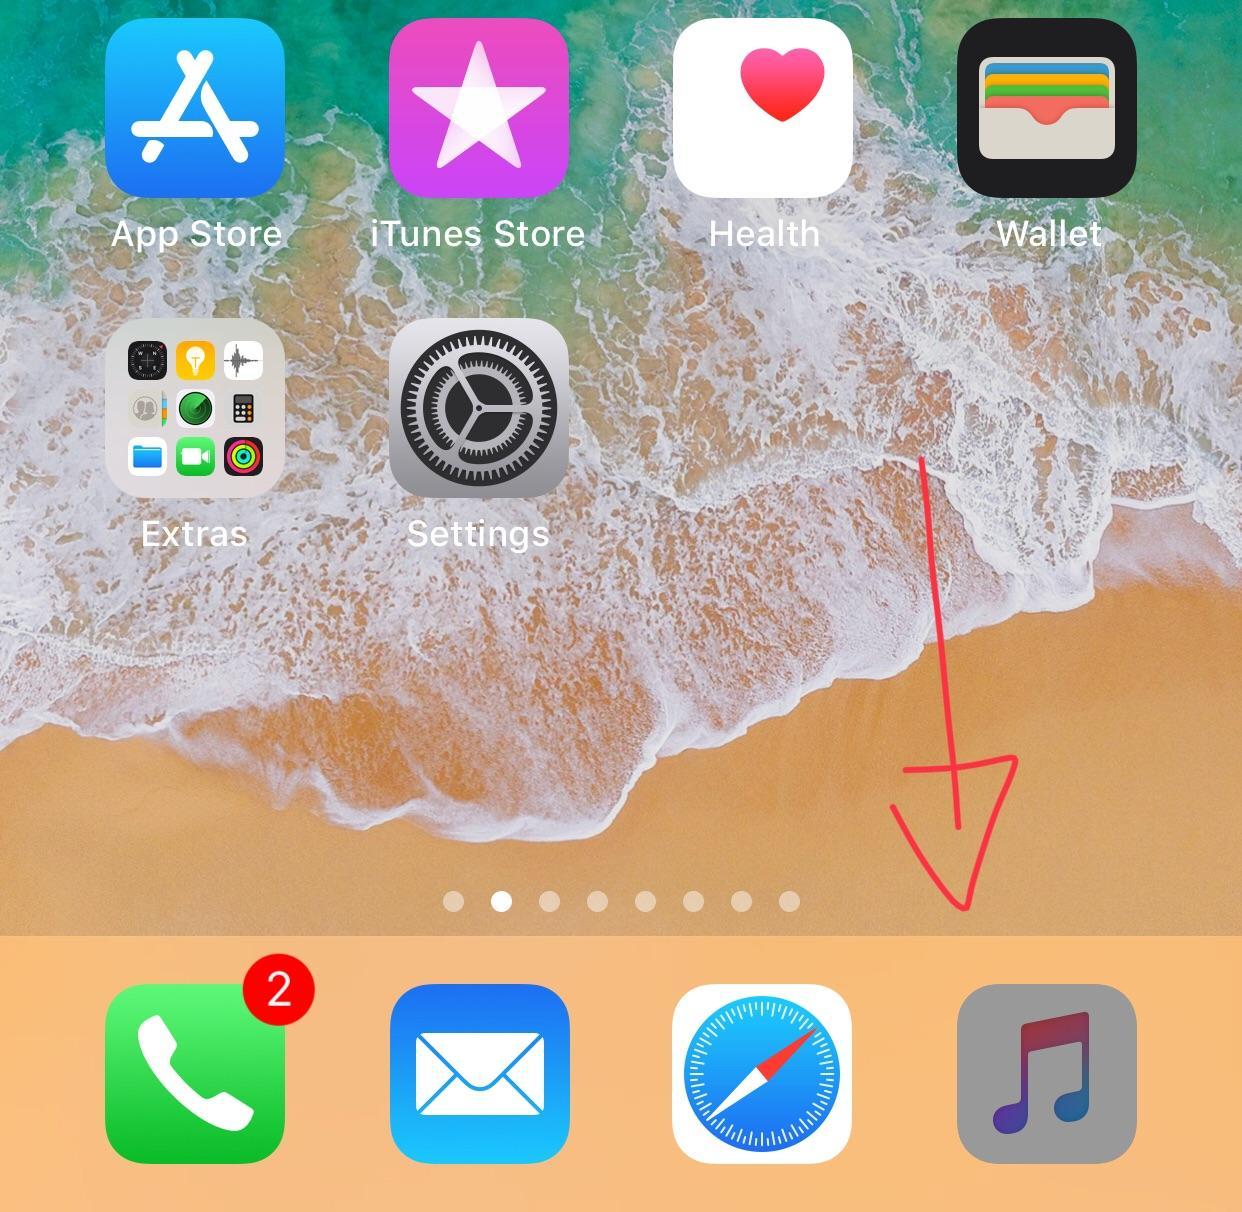 Safari iPhone App Logo - Why does music app icon go dark? happens with safari too. : iphone